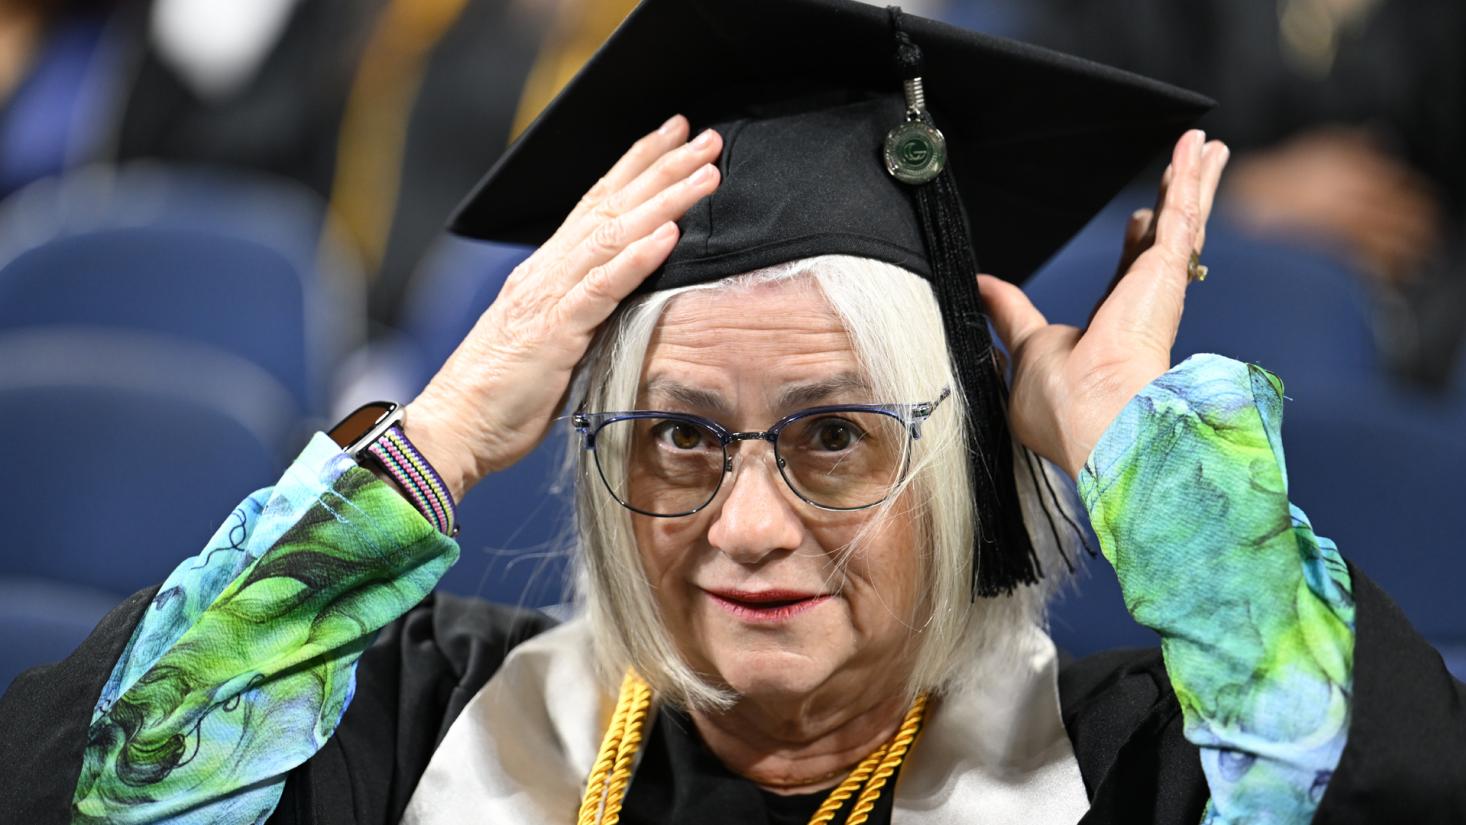 Woman adjusting her graduation cap